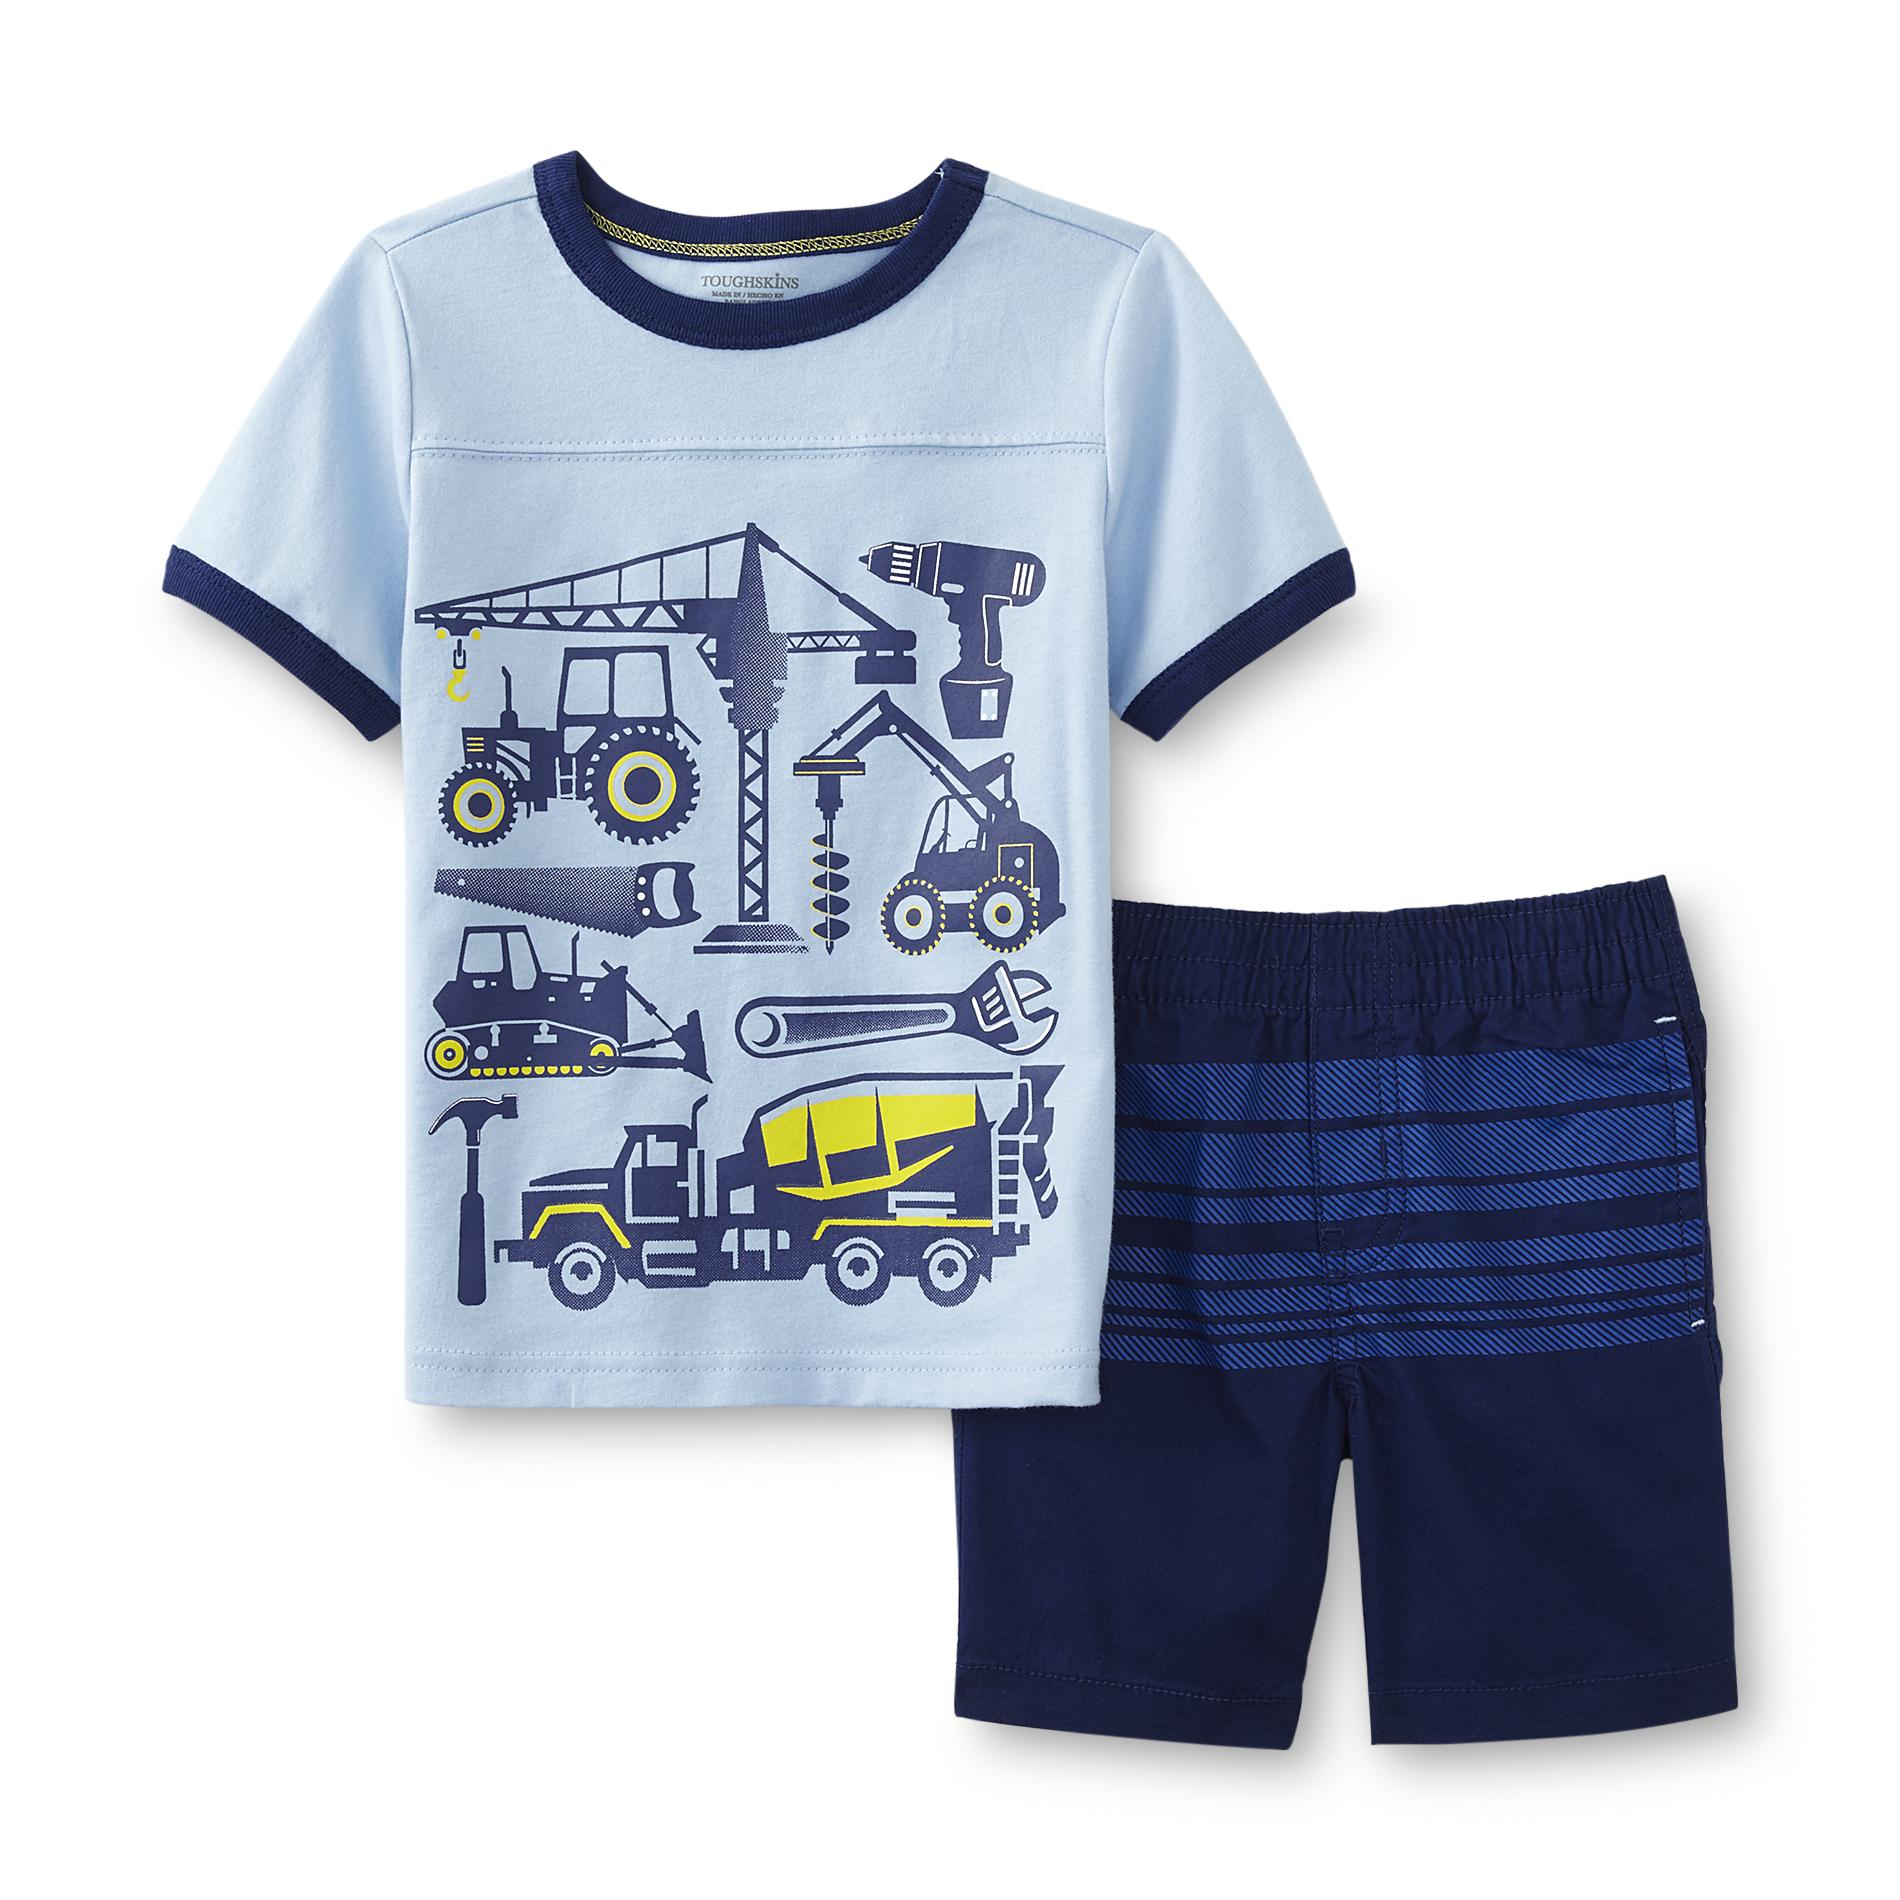 Toughskins Infant & Toddler Boy's Graphic T-Shirt & Shorts - Construction